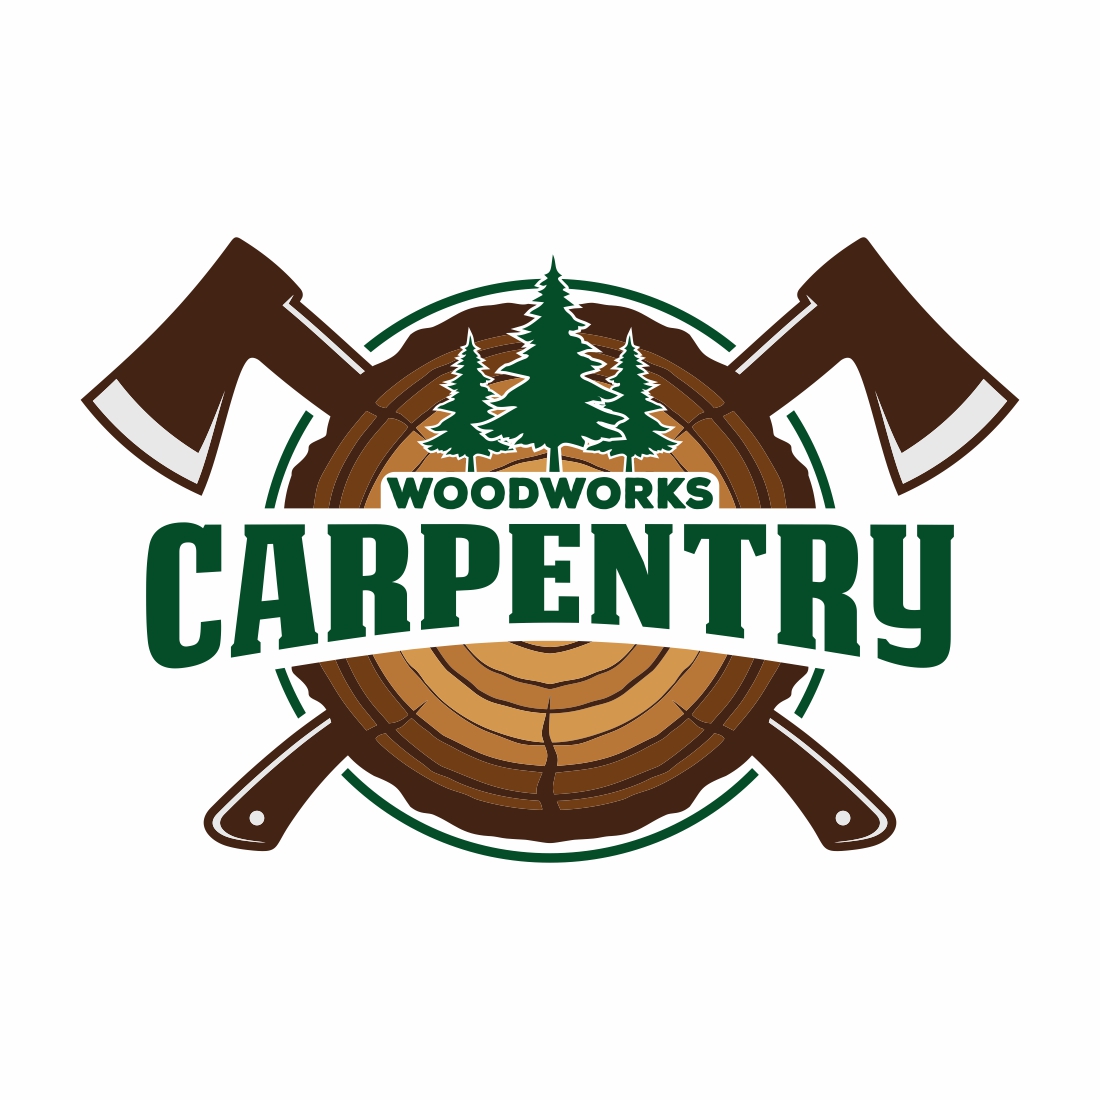 Carpentry vintage logo design template – Only $6 cover image.